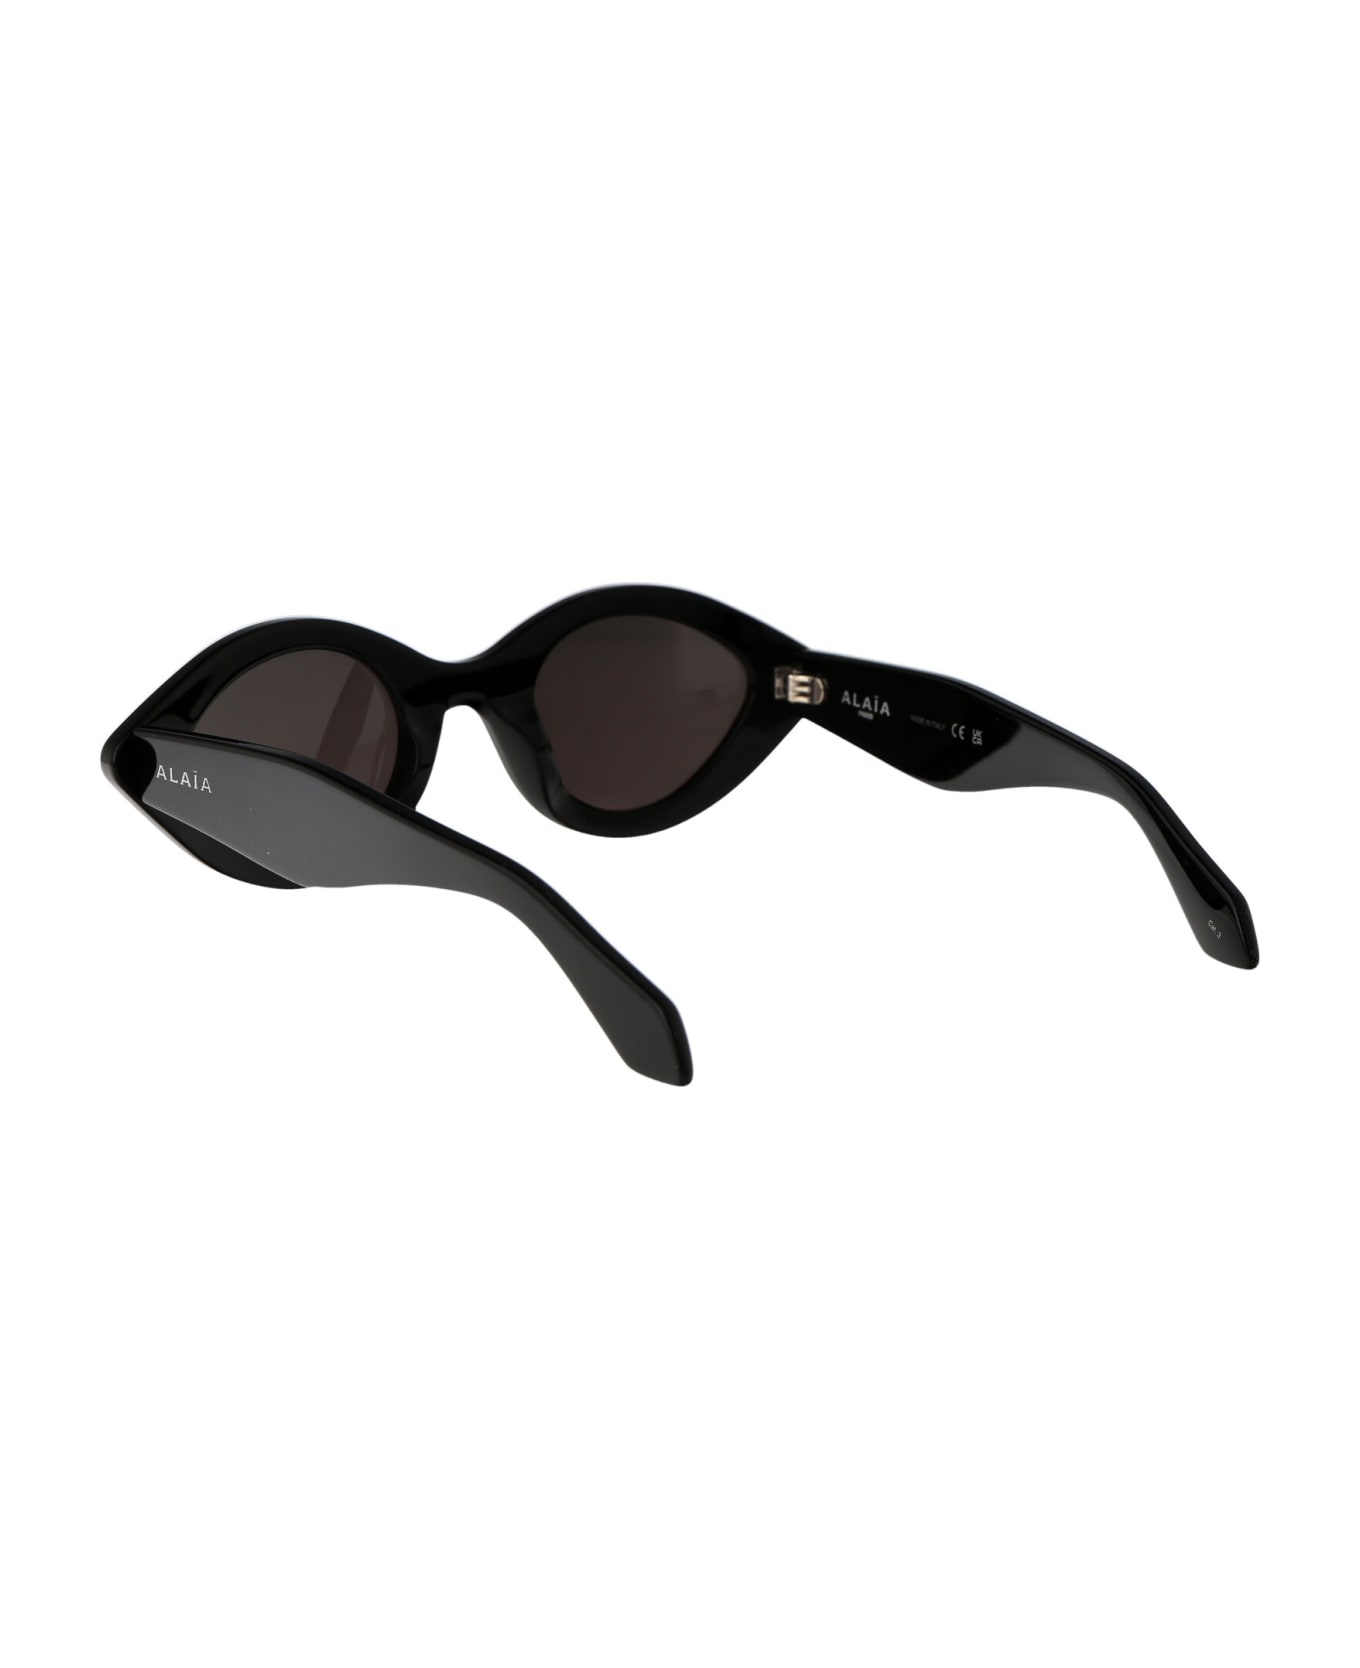 Alaia Aa0069s Sunglasses - 001 BLACK BLACK GREY